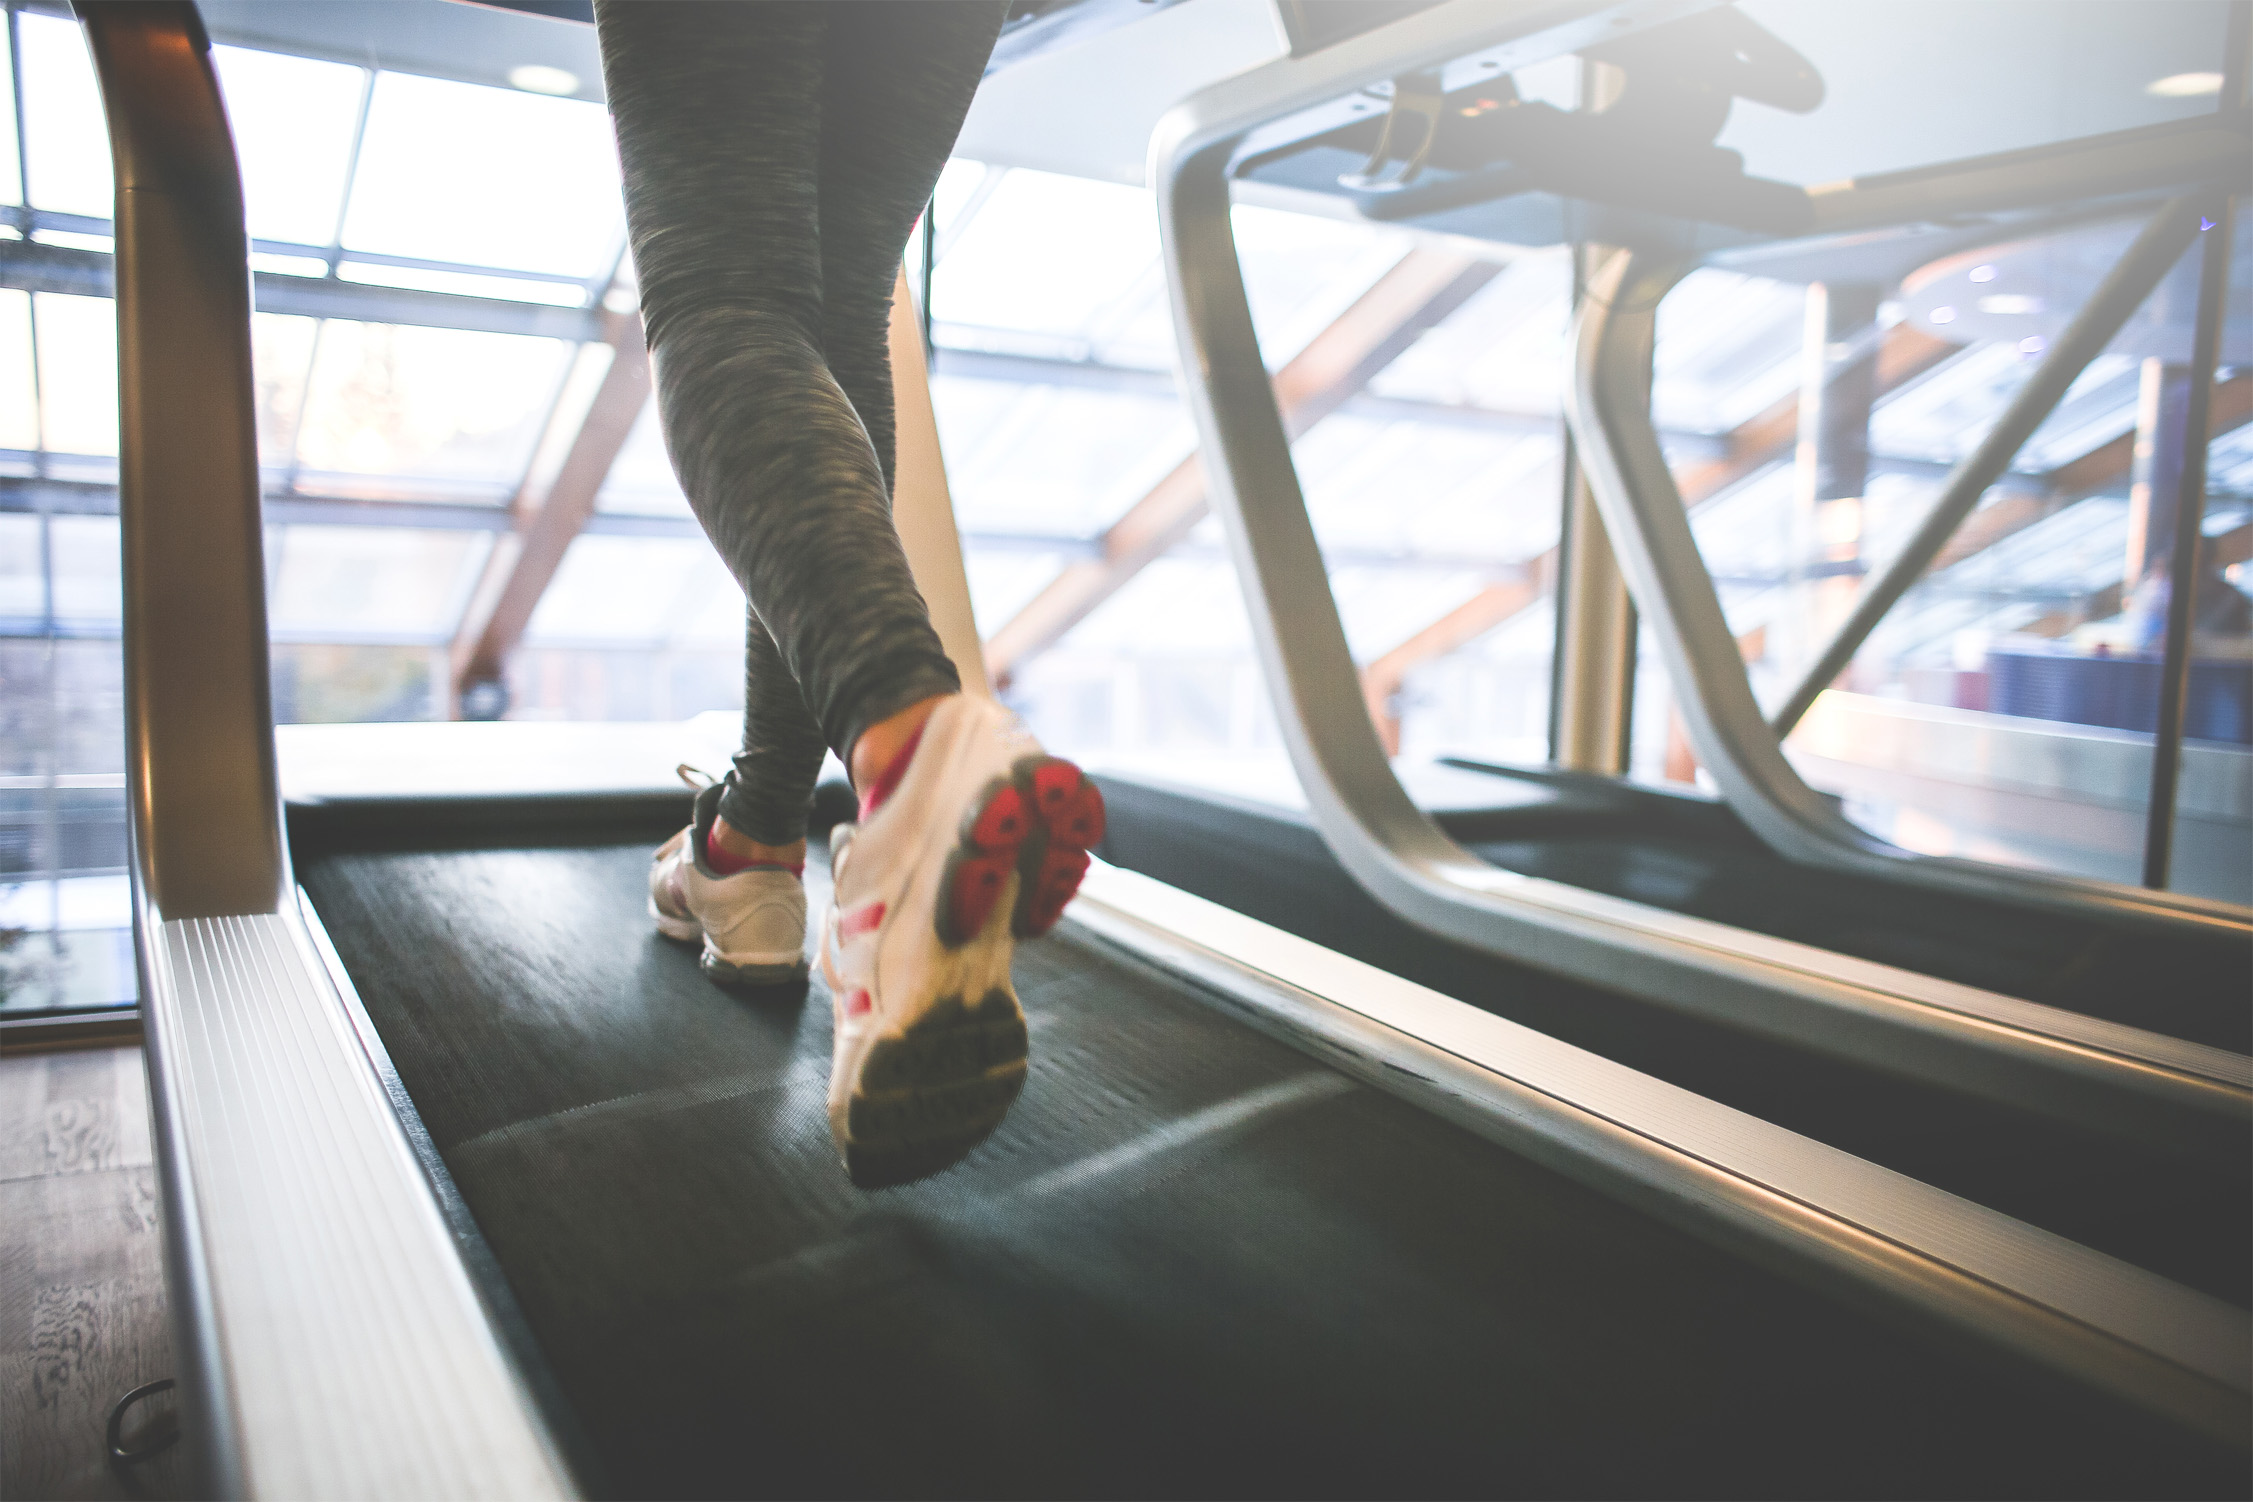 cardio-running-on-a-treadmill_free_stock_photos_picjumbo_hnck4578.jpg